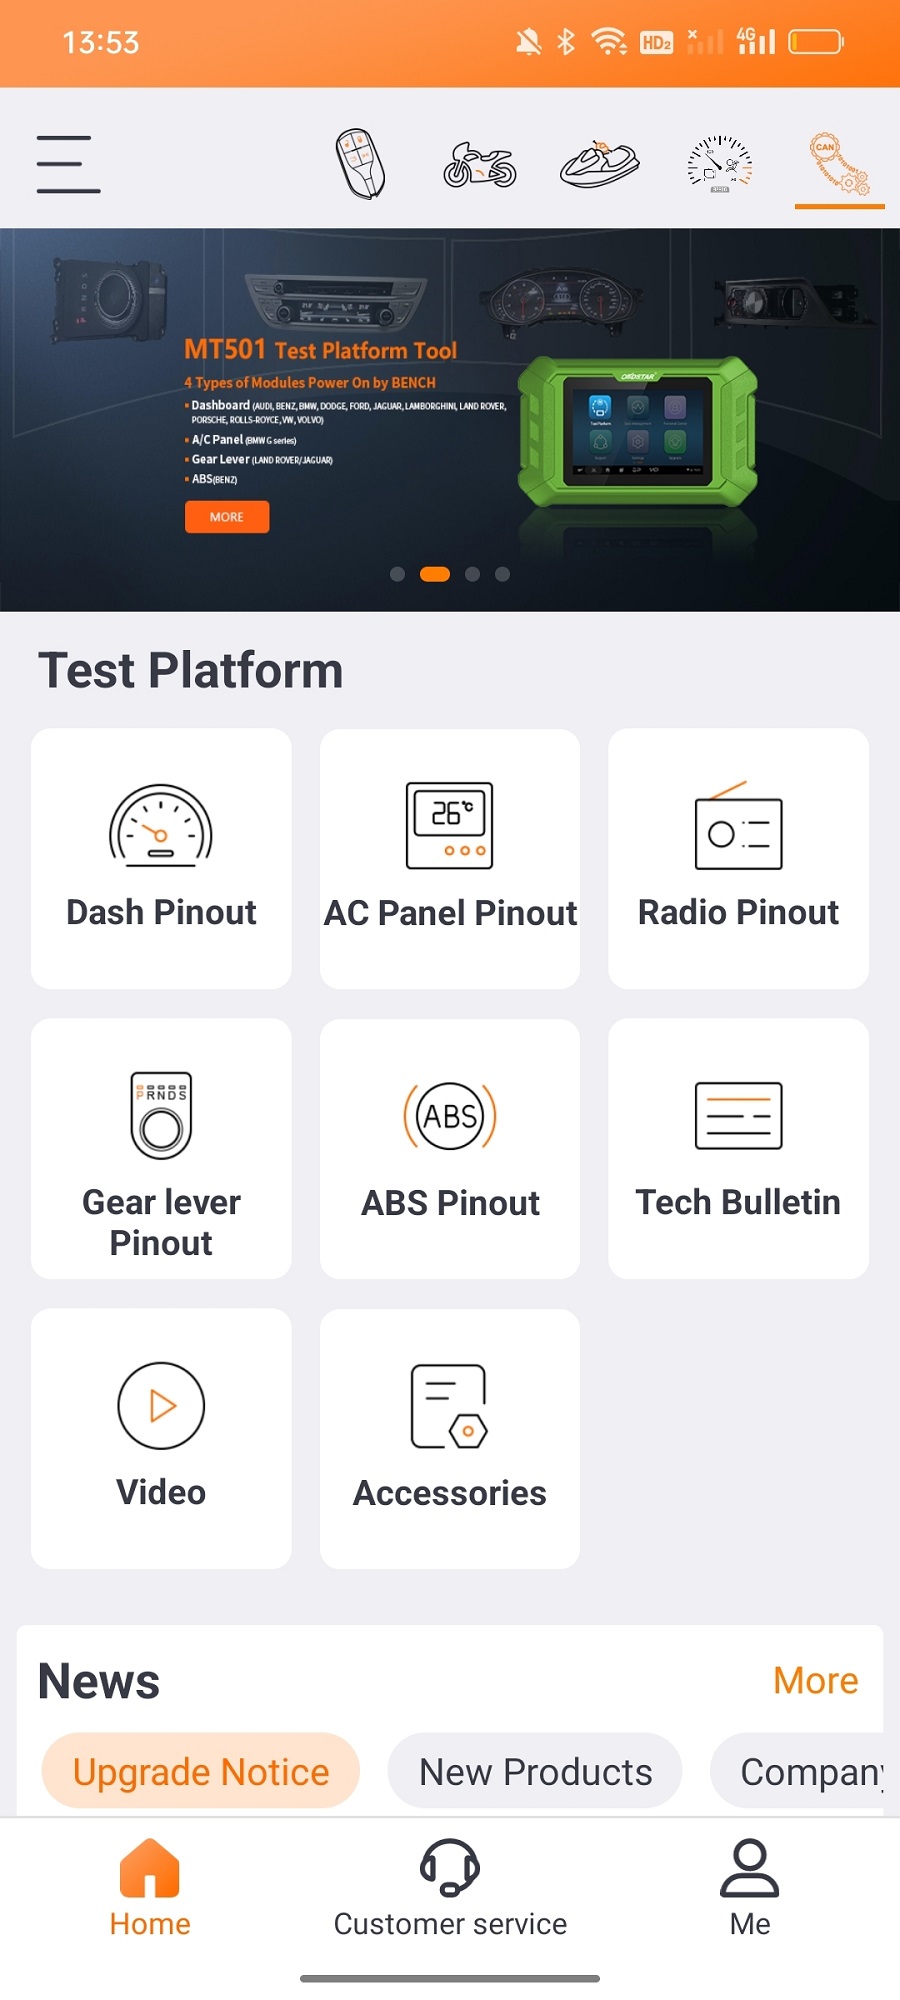 obdstar-mt101-dashboard-test-platform-menu